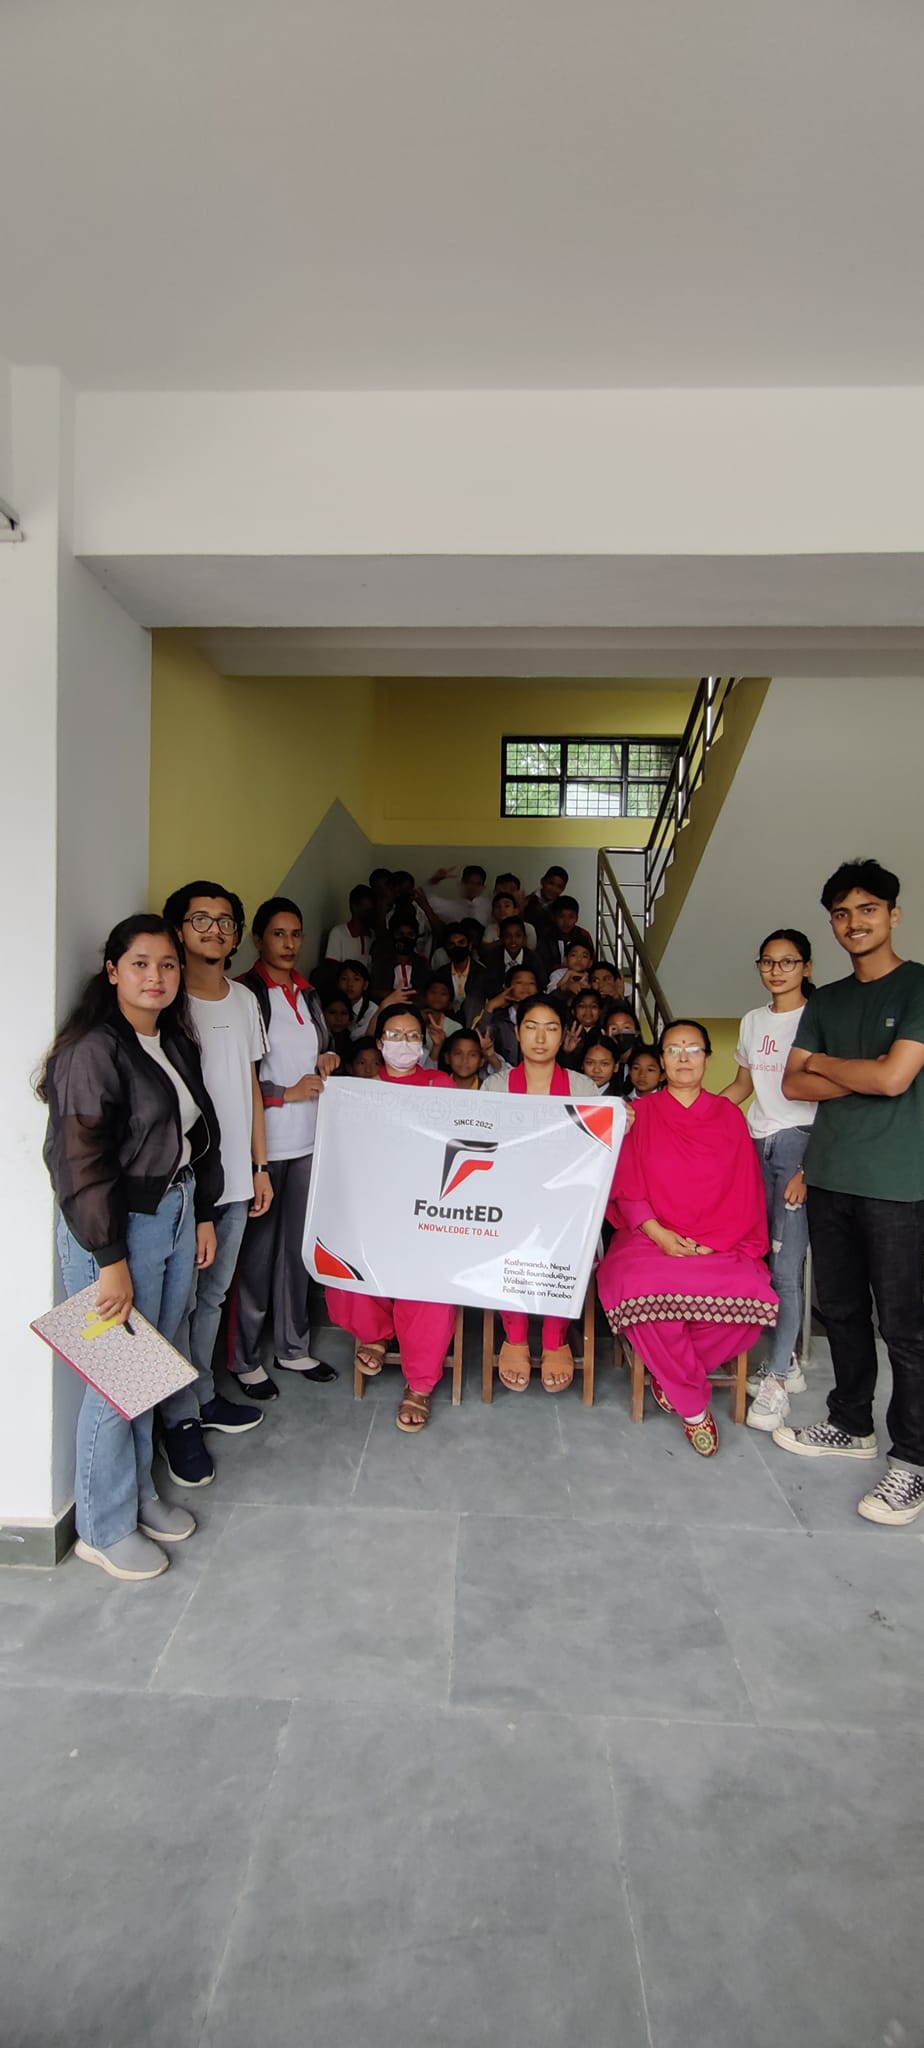 Seminar on Computer Science and technology usages awareness at Balpremi School, Bhaktapur